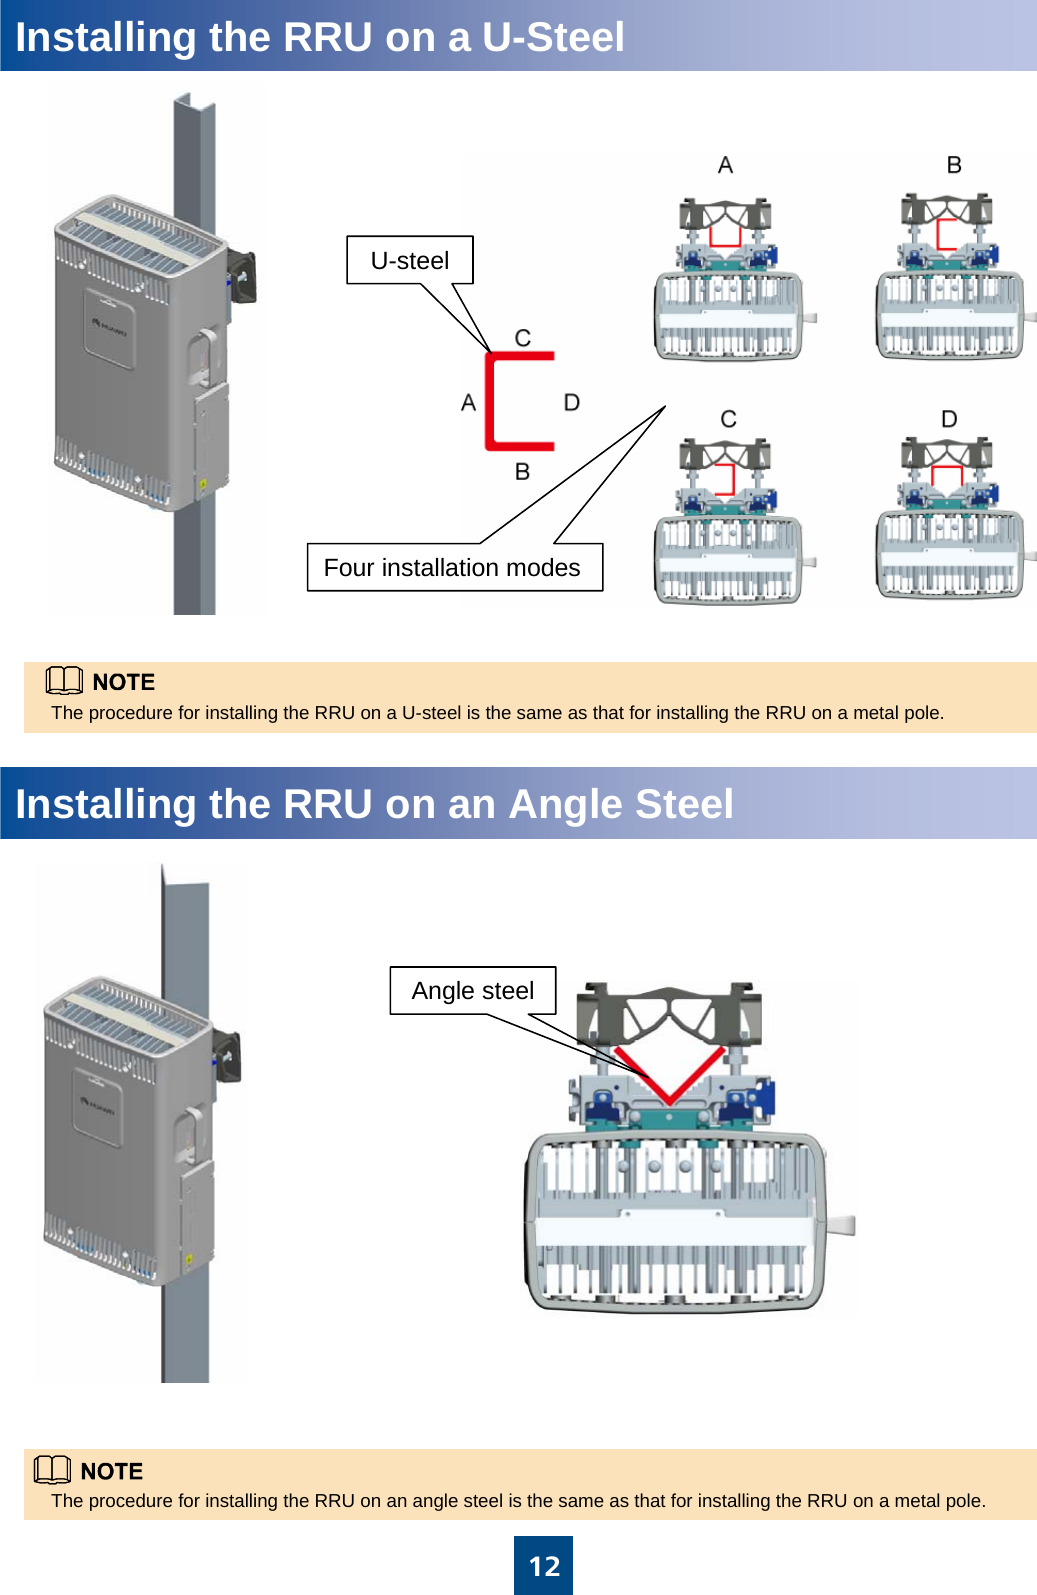 Installing the RRU on a U-SteelThe procedure for installing the RRU on a U-steel is the same as that for installing the RRU on a metal pole.Installing the RRU on an Angle SteelThe procedure for installing the RRU on an angle steel is the same as that for installing the RRU on a metal pole.U-steelFour installation modesAngle steel12